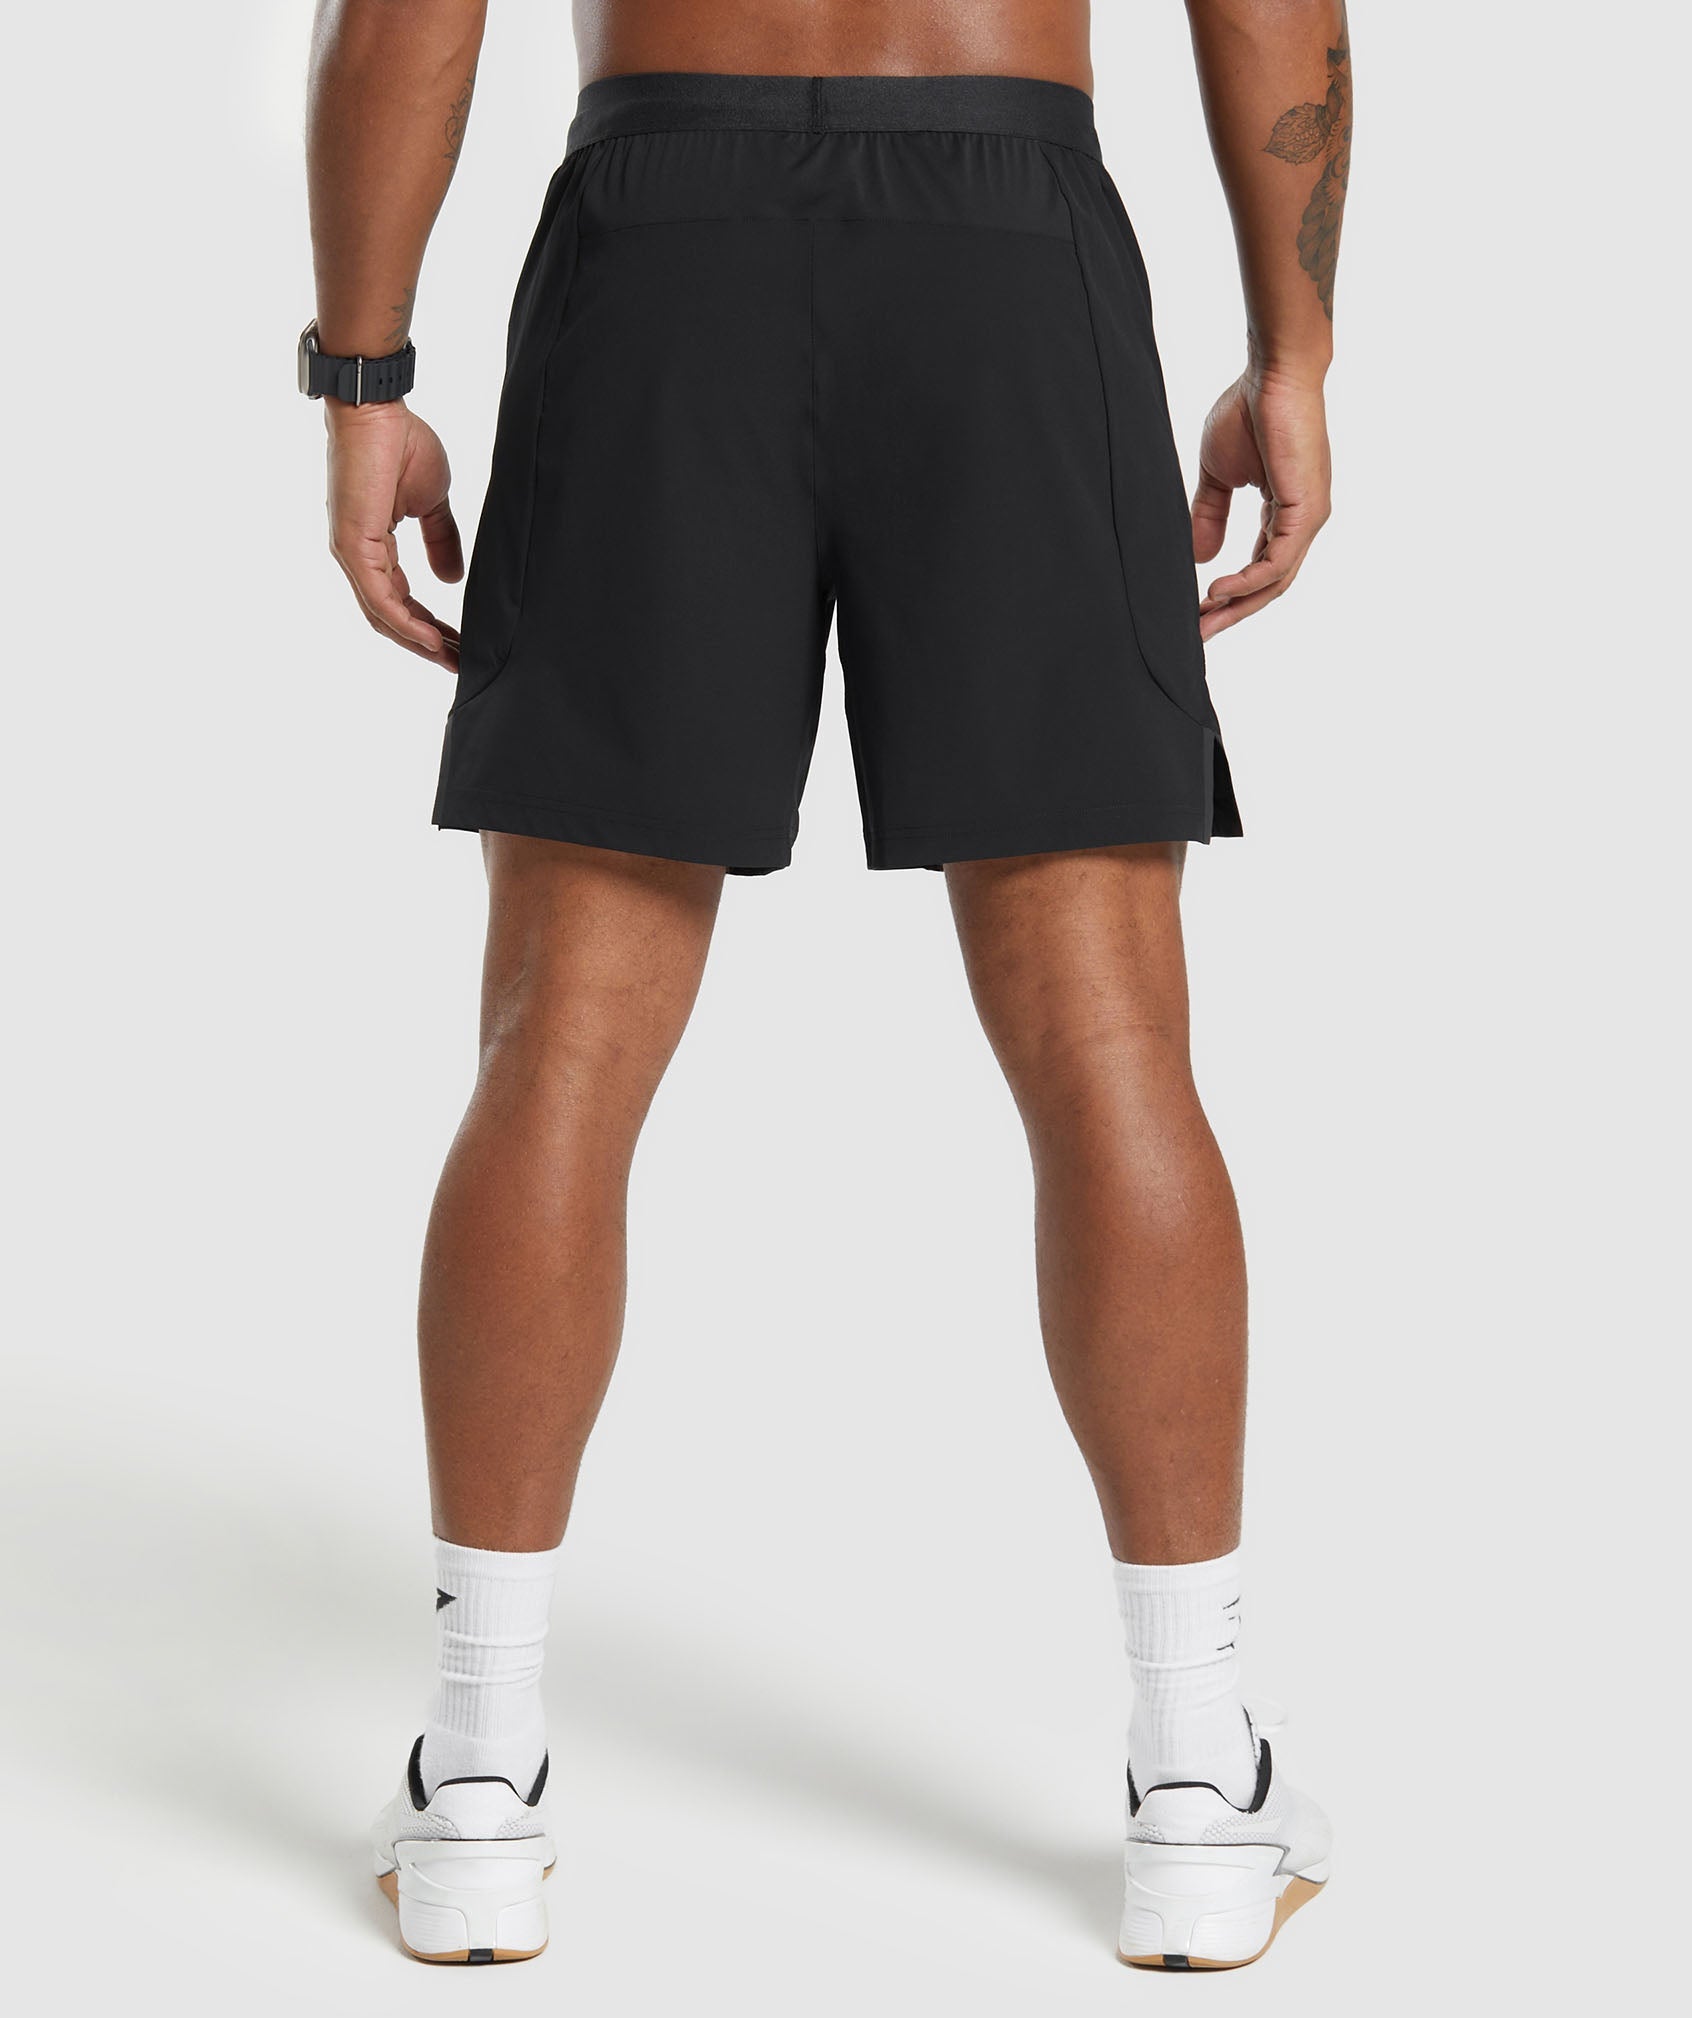 Apex 7" Hybrid Shorts in Black - view 2